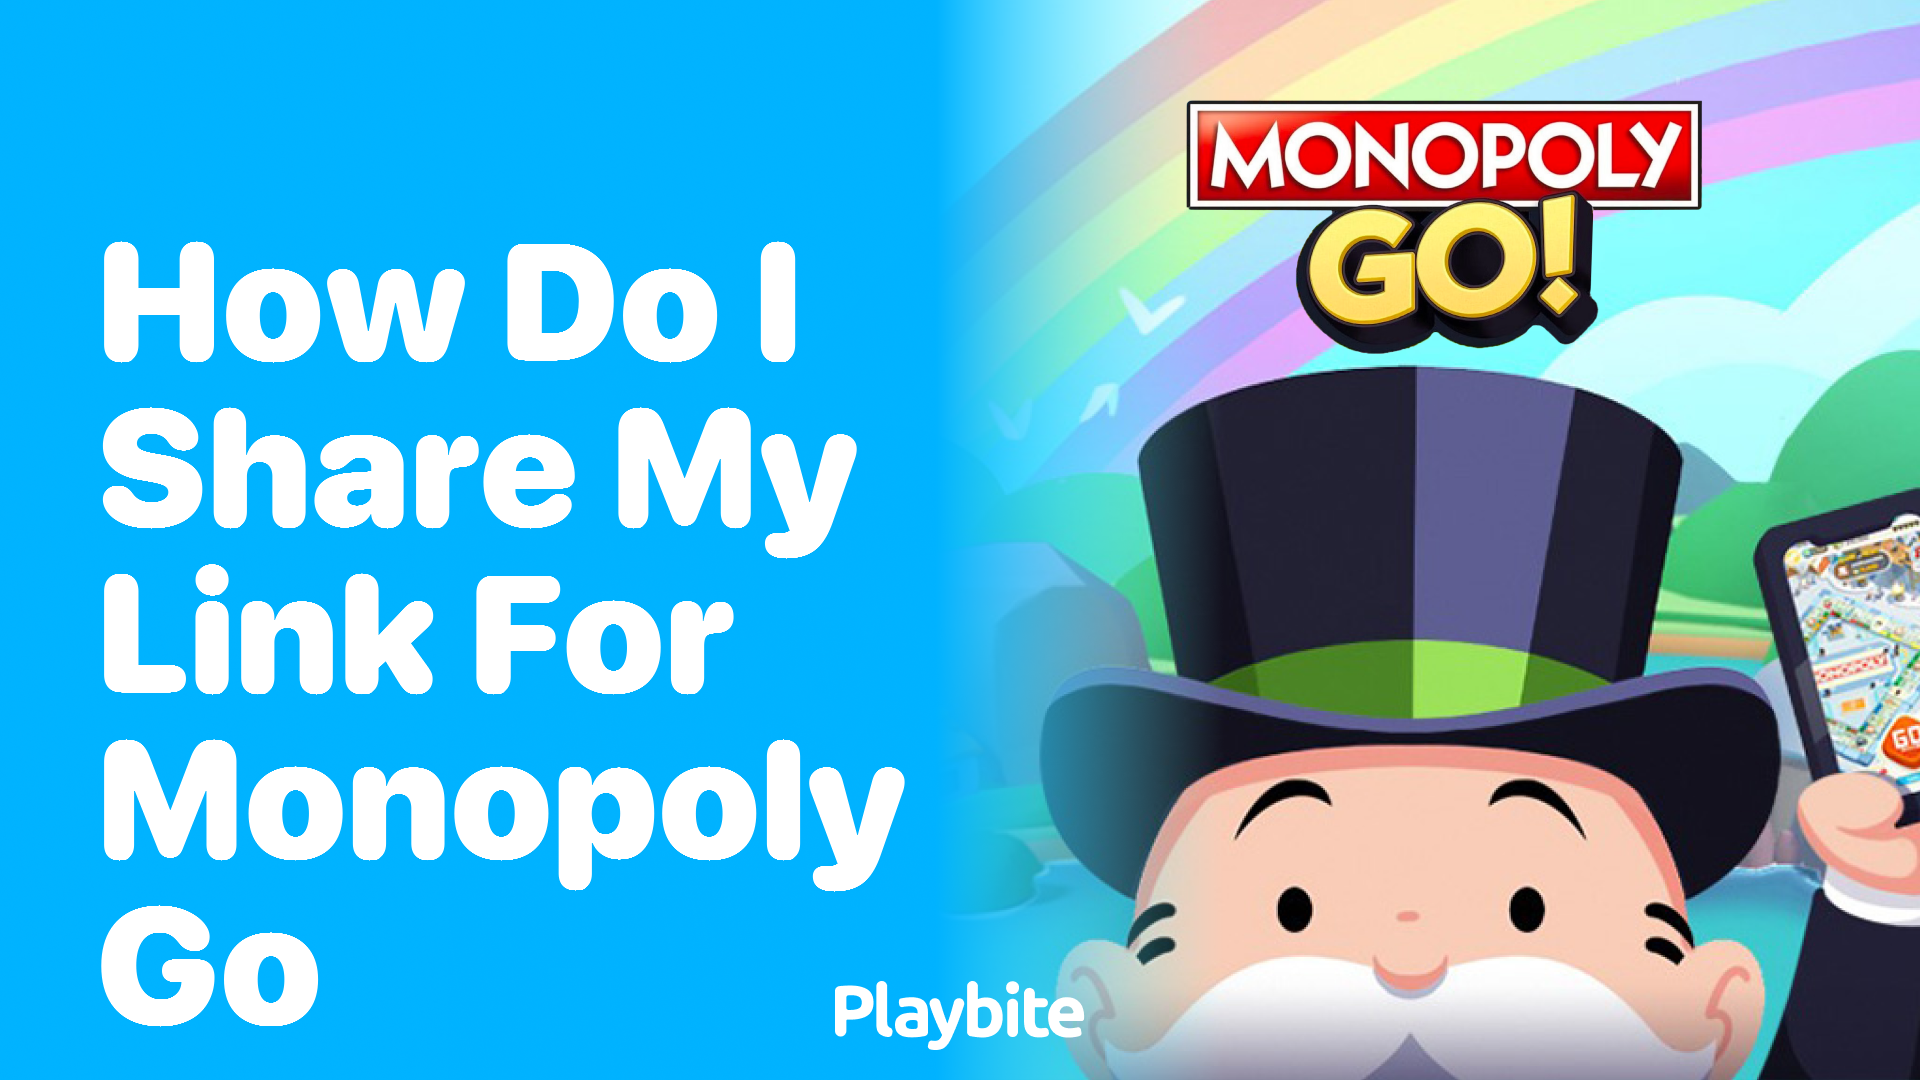 How Do I Share My Link for Monopoly Go?